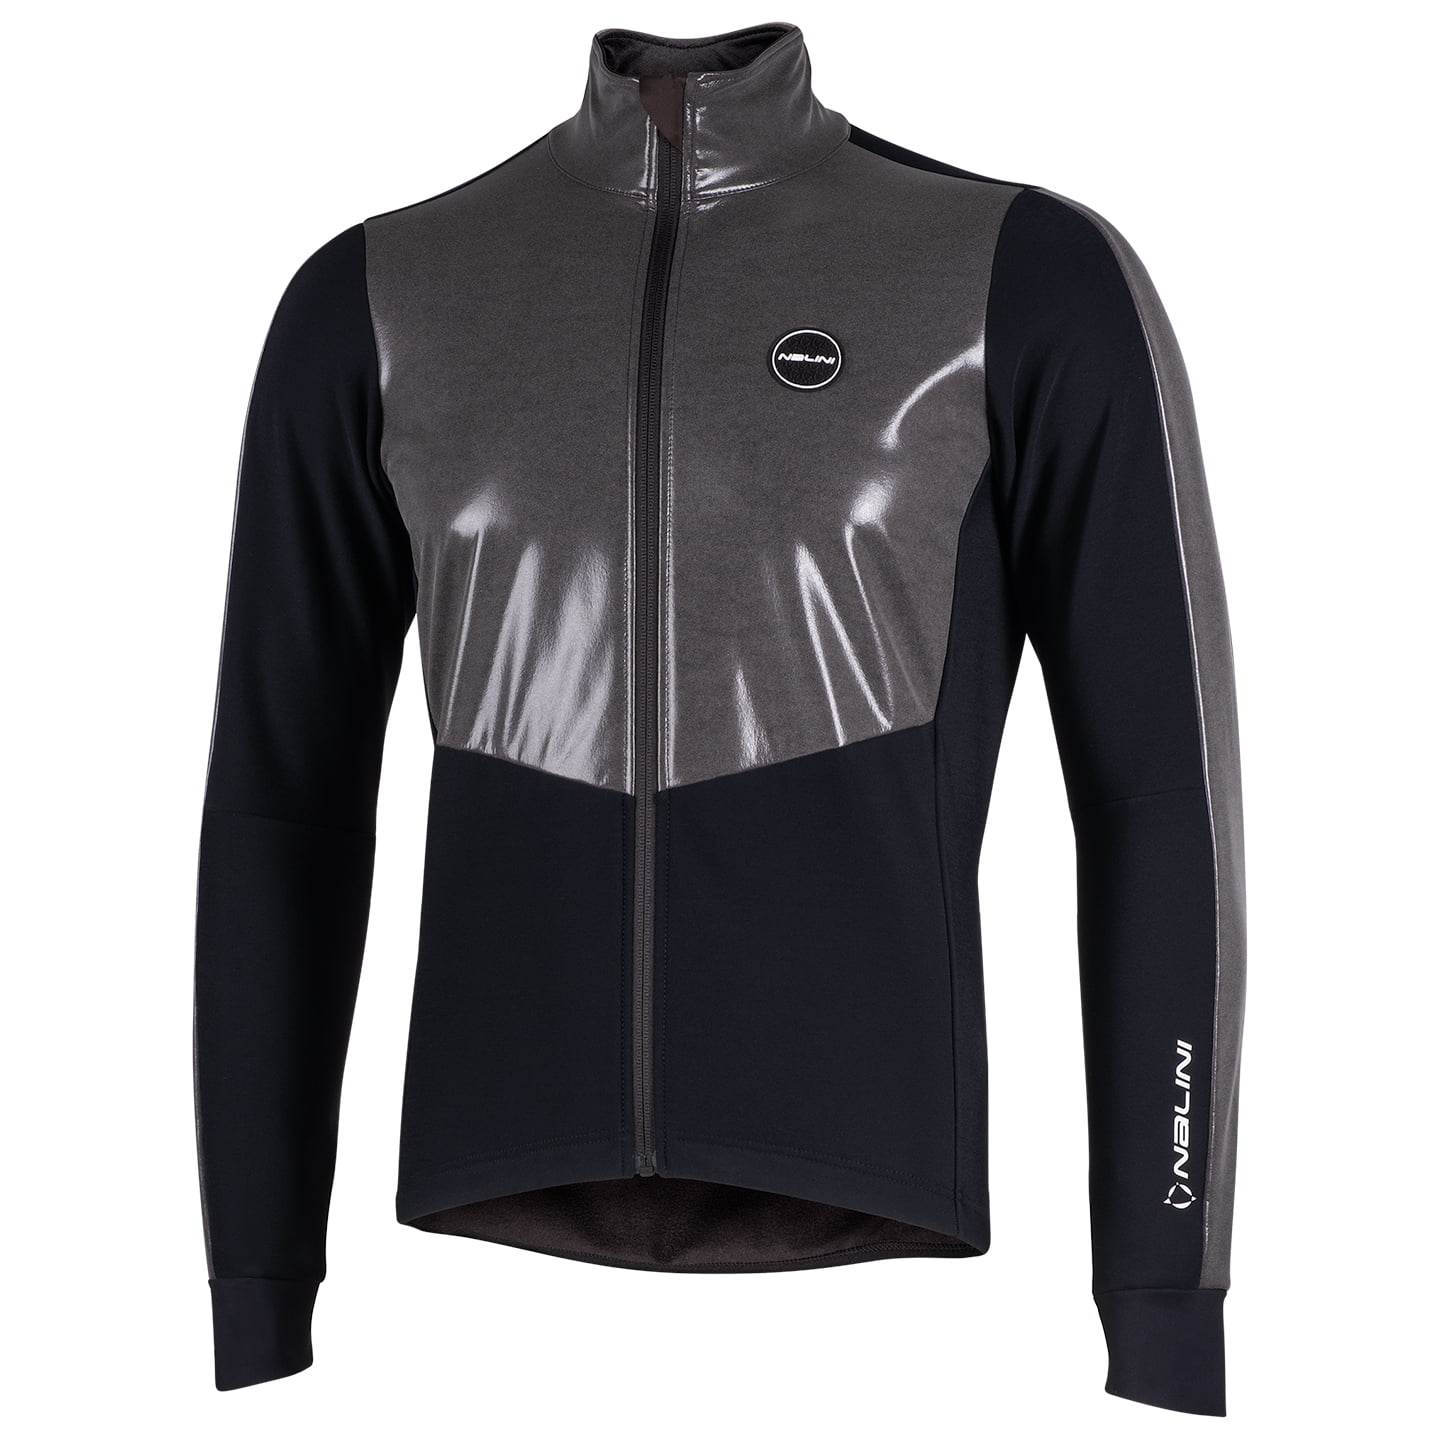 NALINI New Warm Reflex winter jacket Thermal Jacket, for men, size 2XL, Winter jacket, Cycling clothing